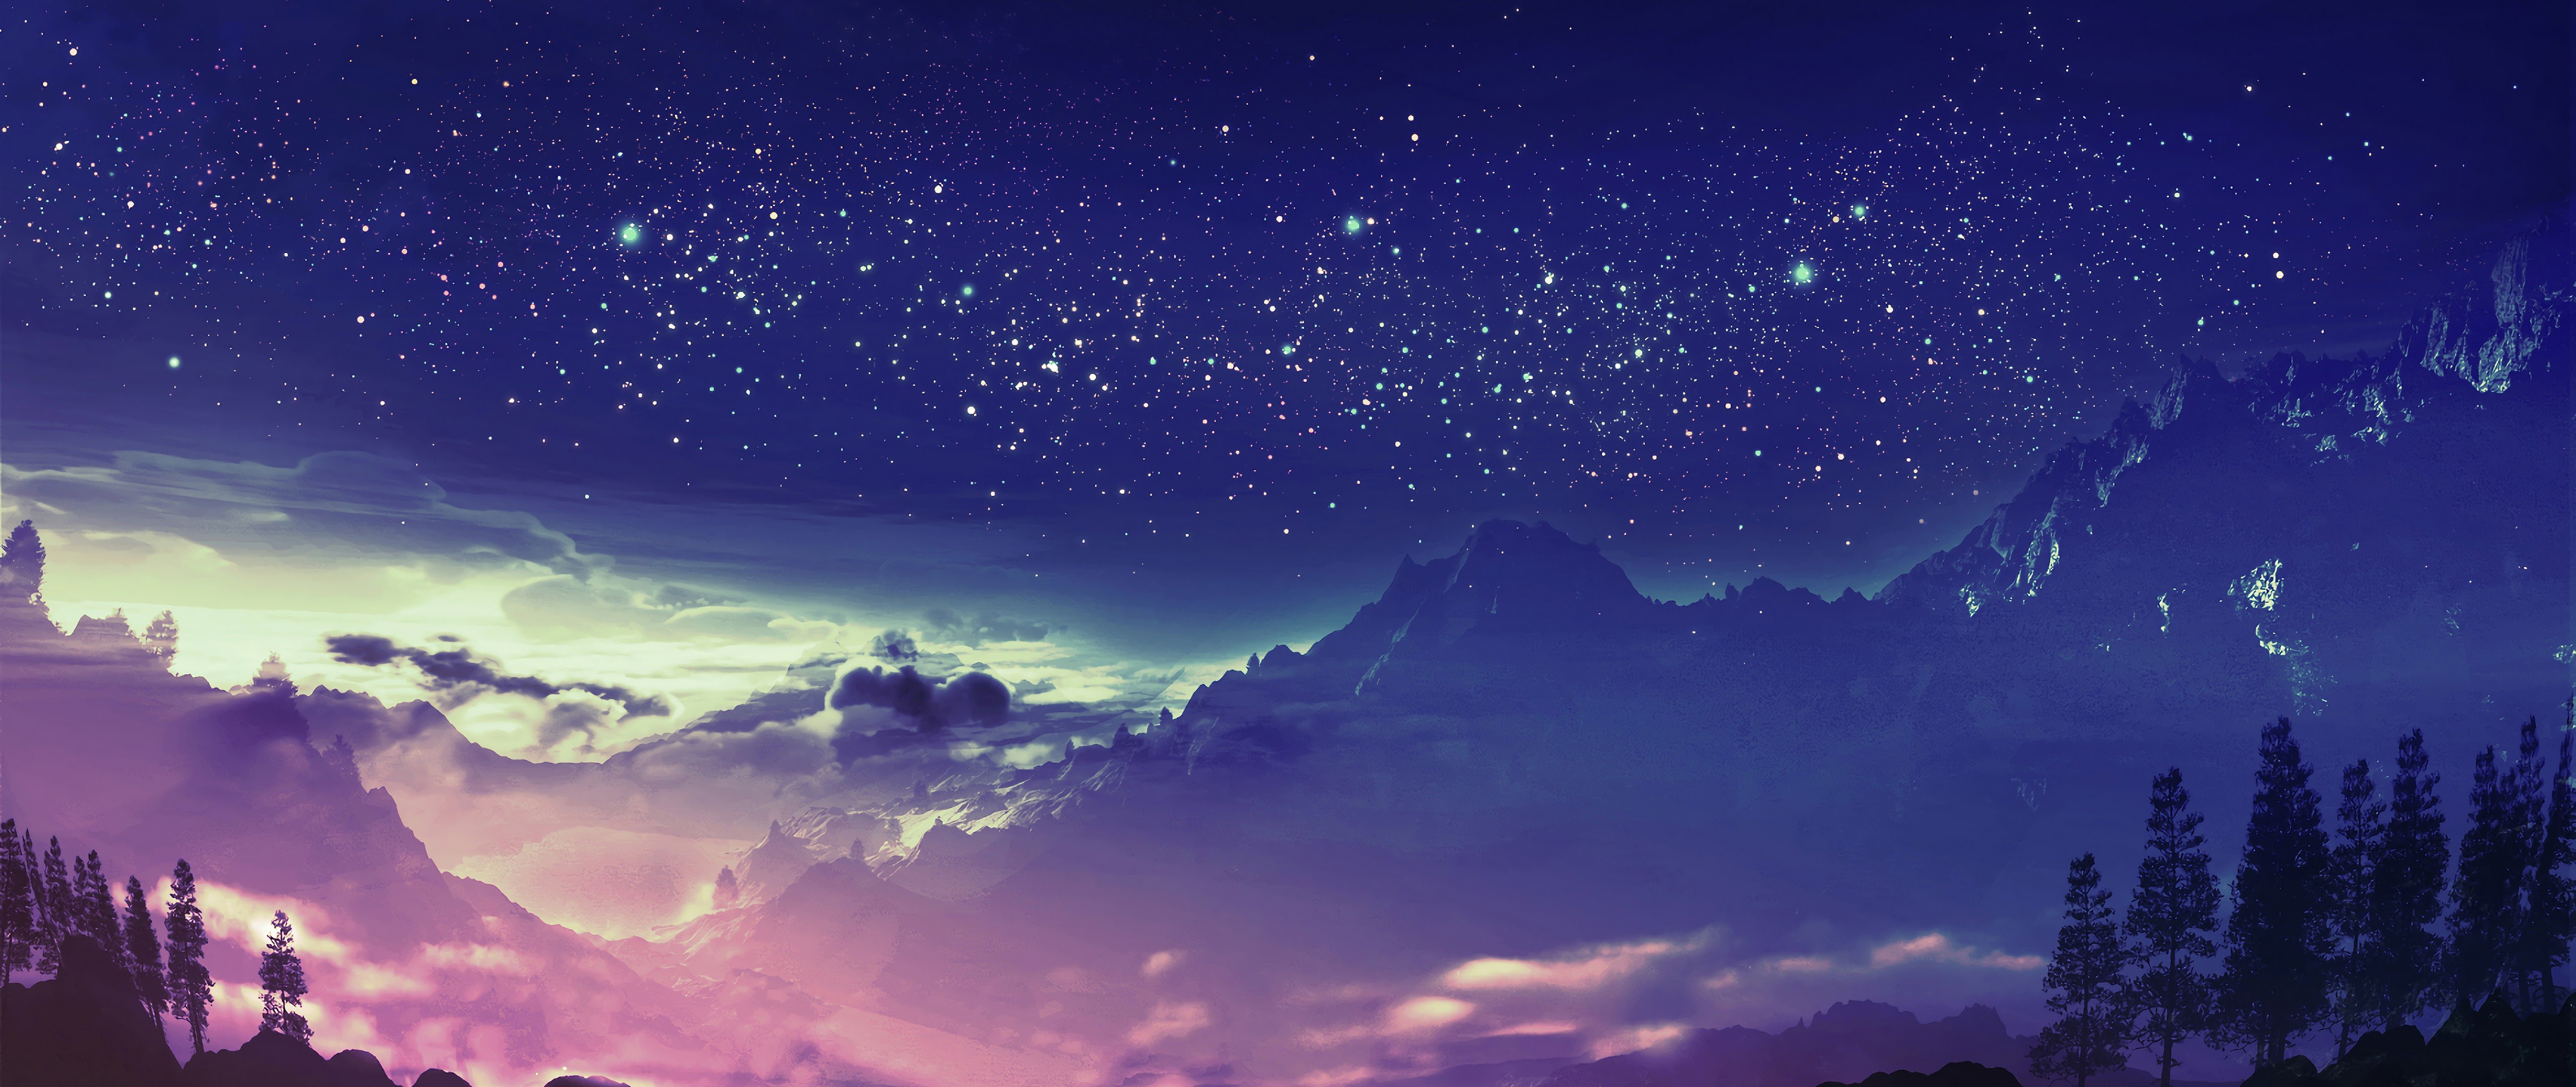 Mountain Night Scenery Stars Landscape Anime 4K Wallpaper